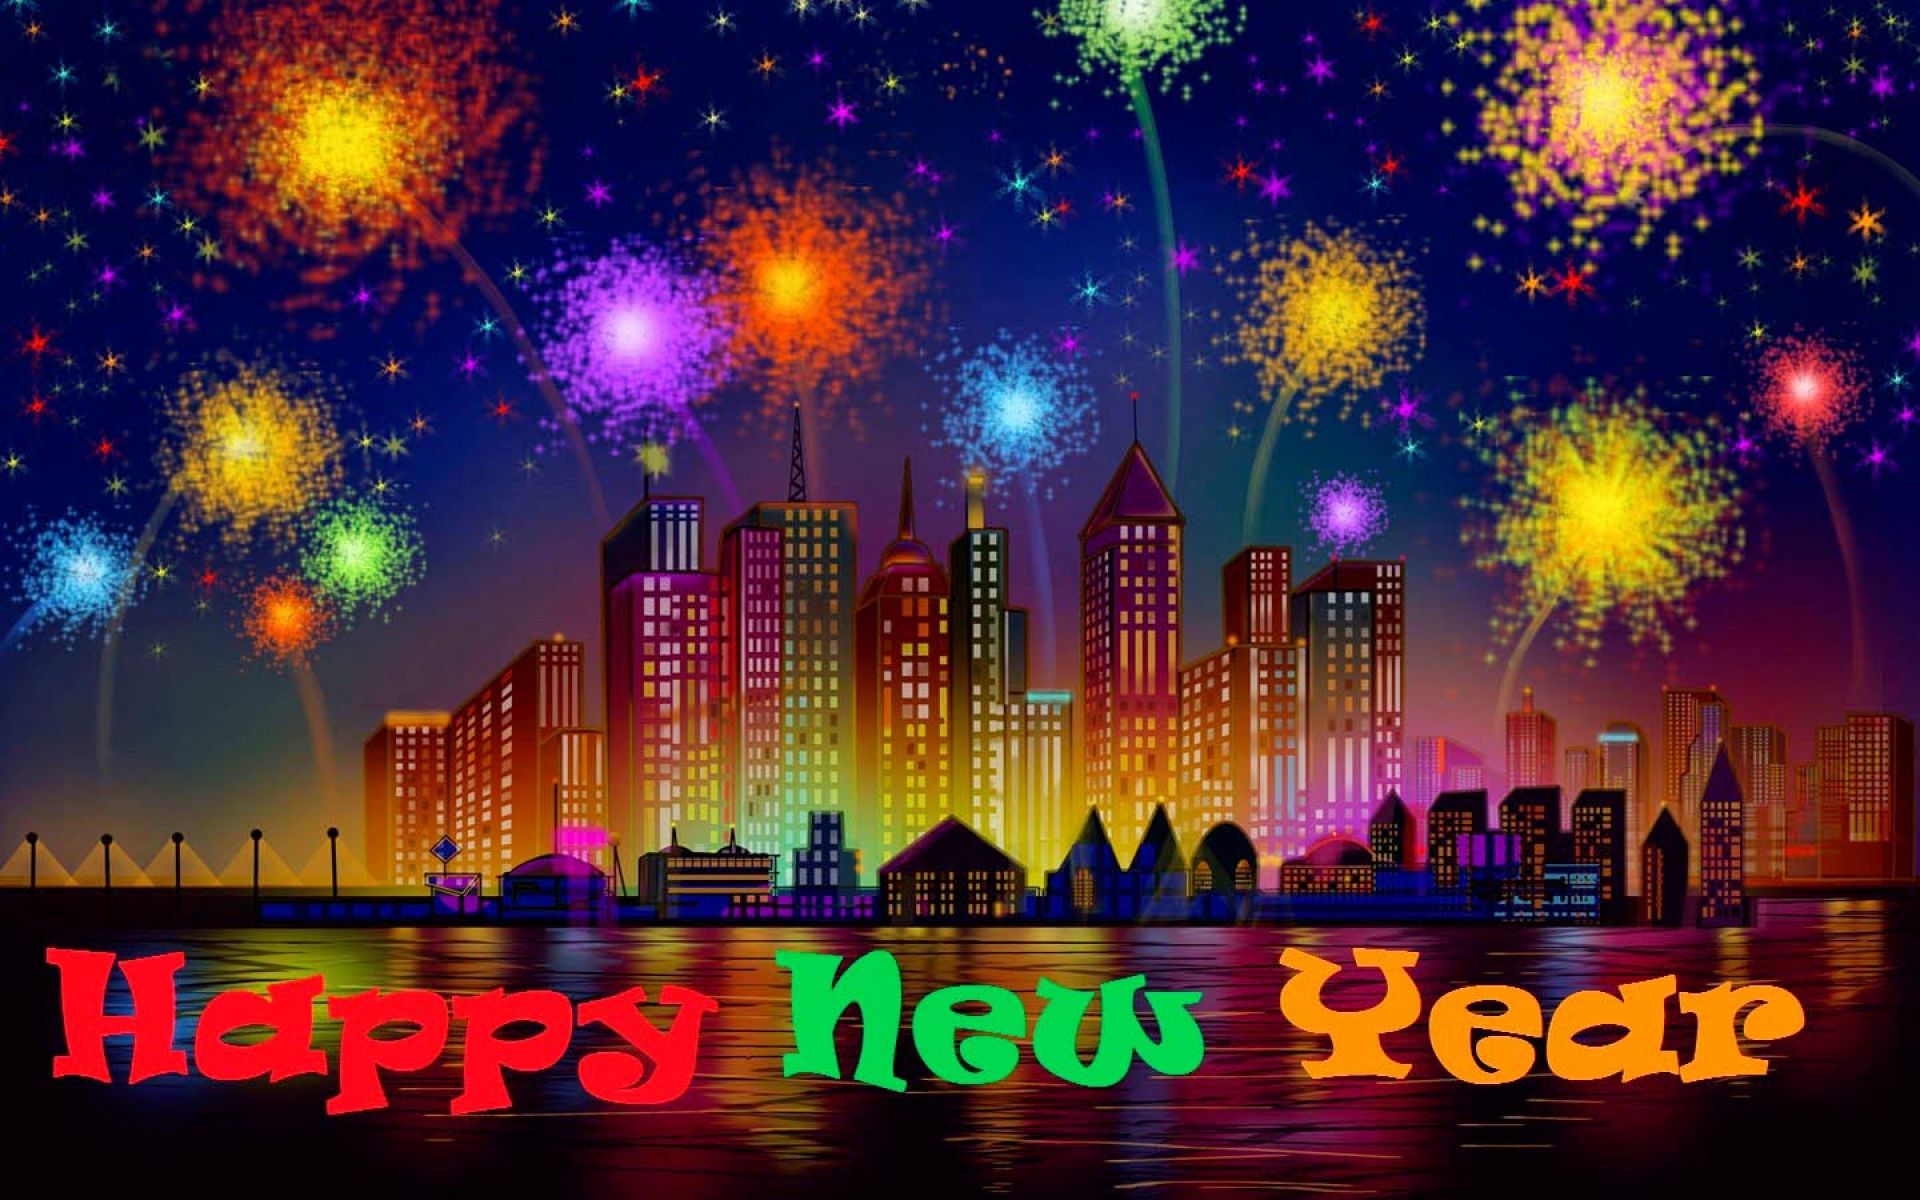 Happy New Year Fireworks Image HD Desktop Background